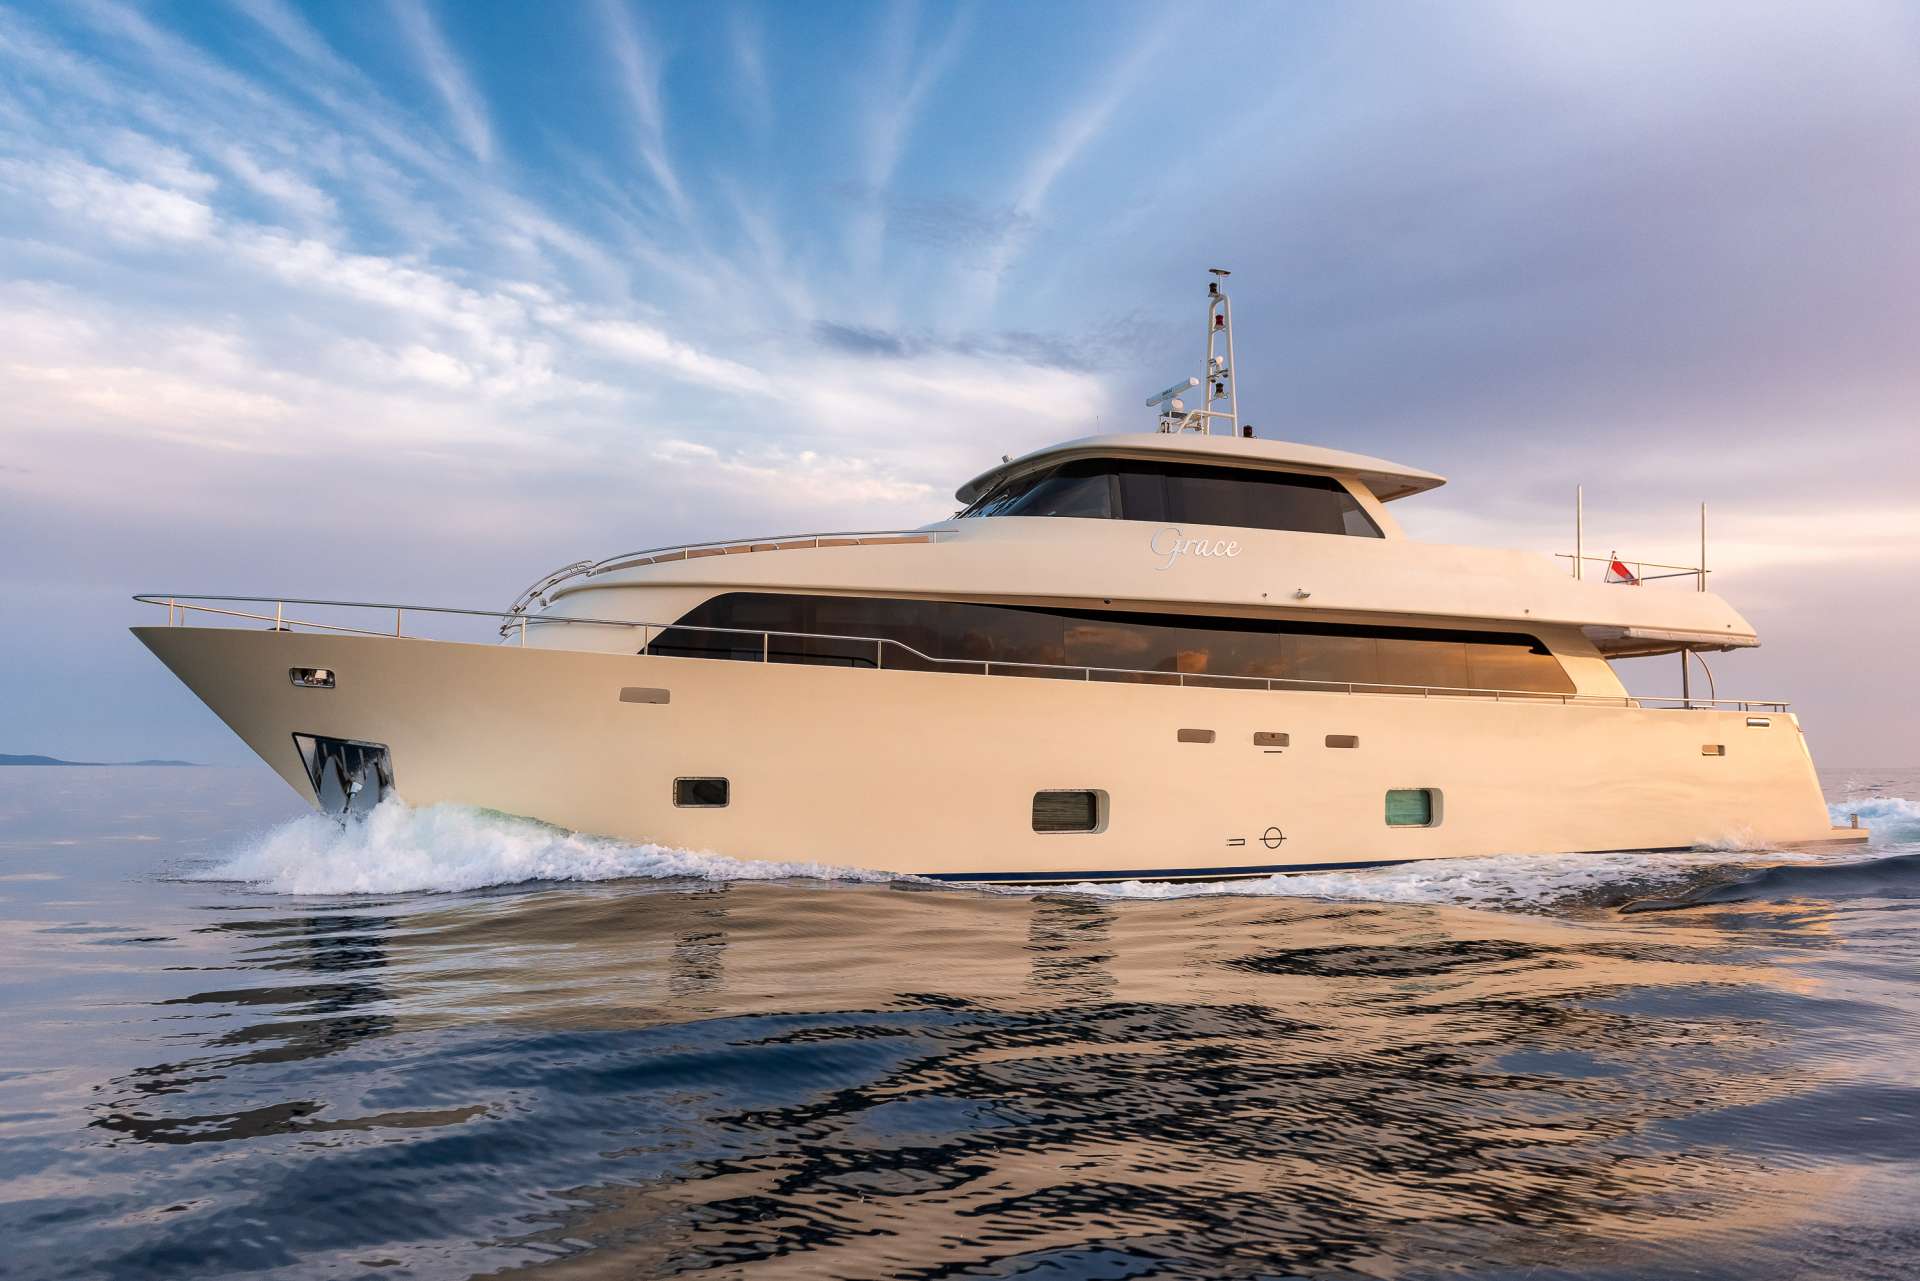 Motor Yacht 'GRACE', 10 PAX, 5 Crew, 91.00 Ft, 28.00 Meters, Built 2013, Aegean Build